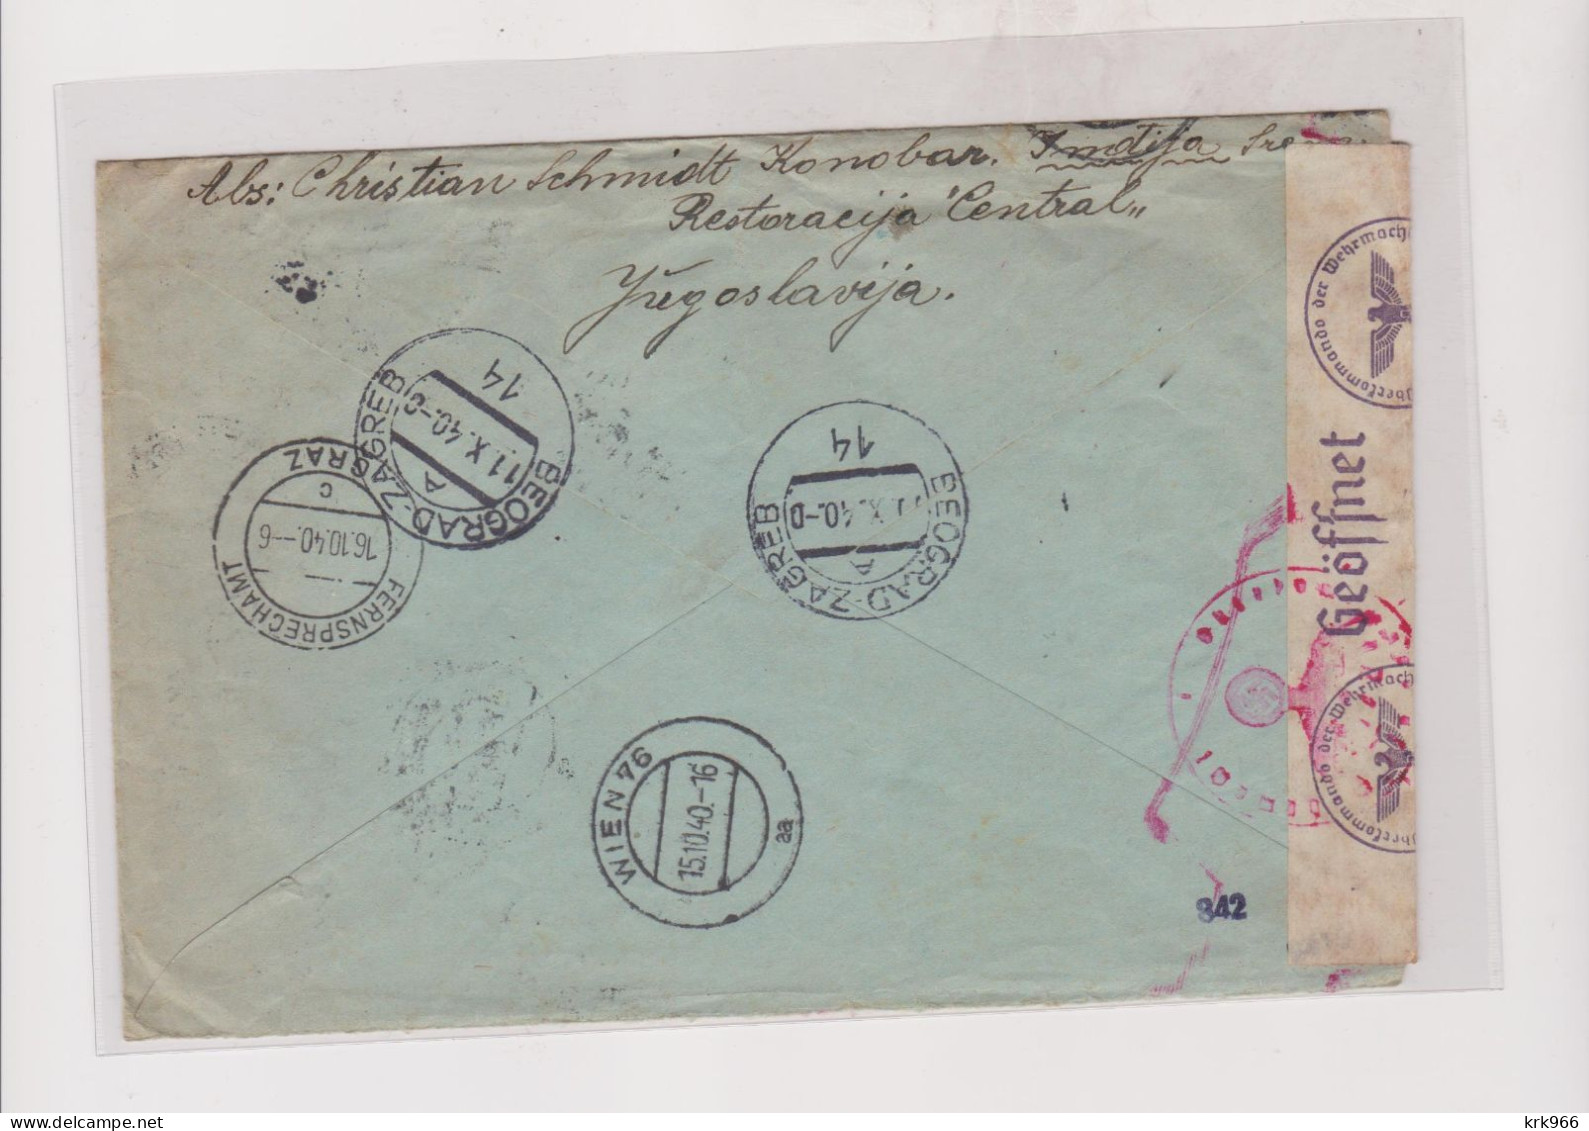 YUGOSLAVIA,1940 INDIJA Airmail Censored Cover To GRAZ AUSTRIA GERMANY - Covers & Documents